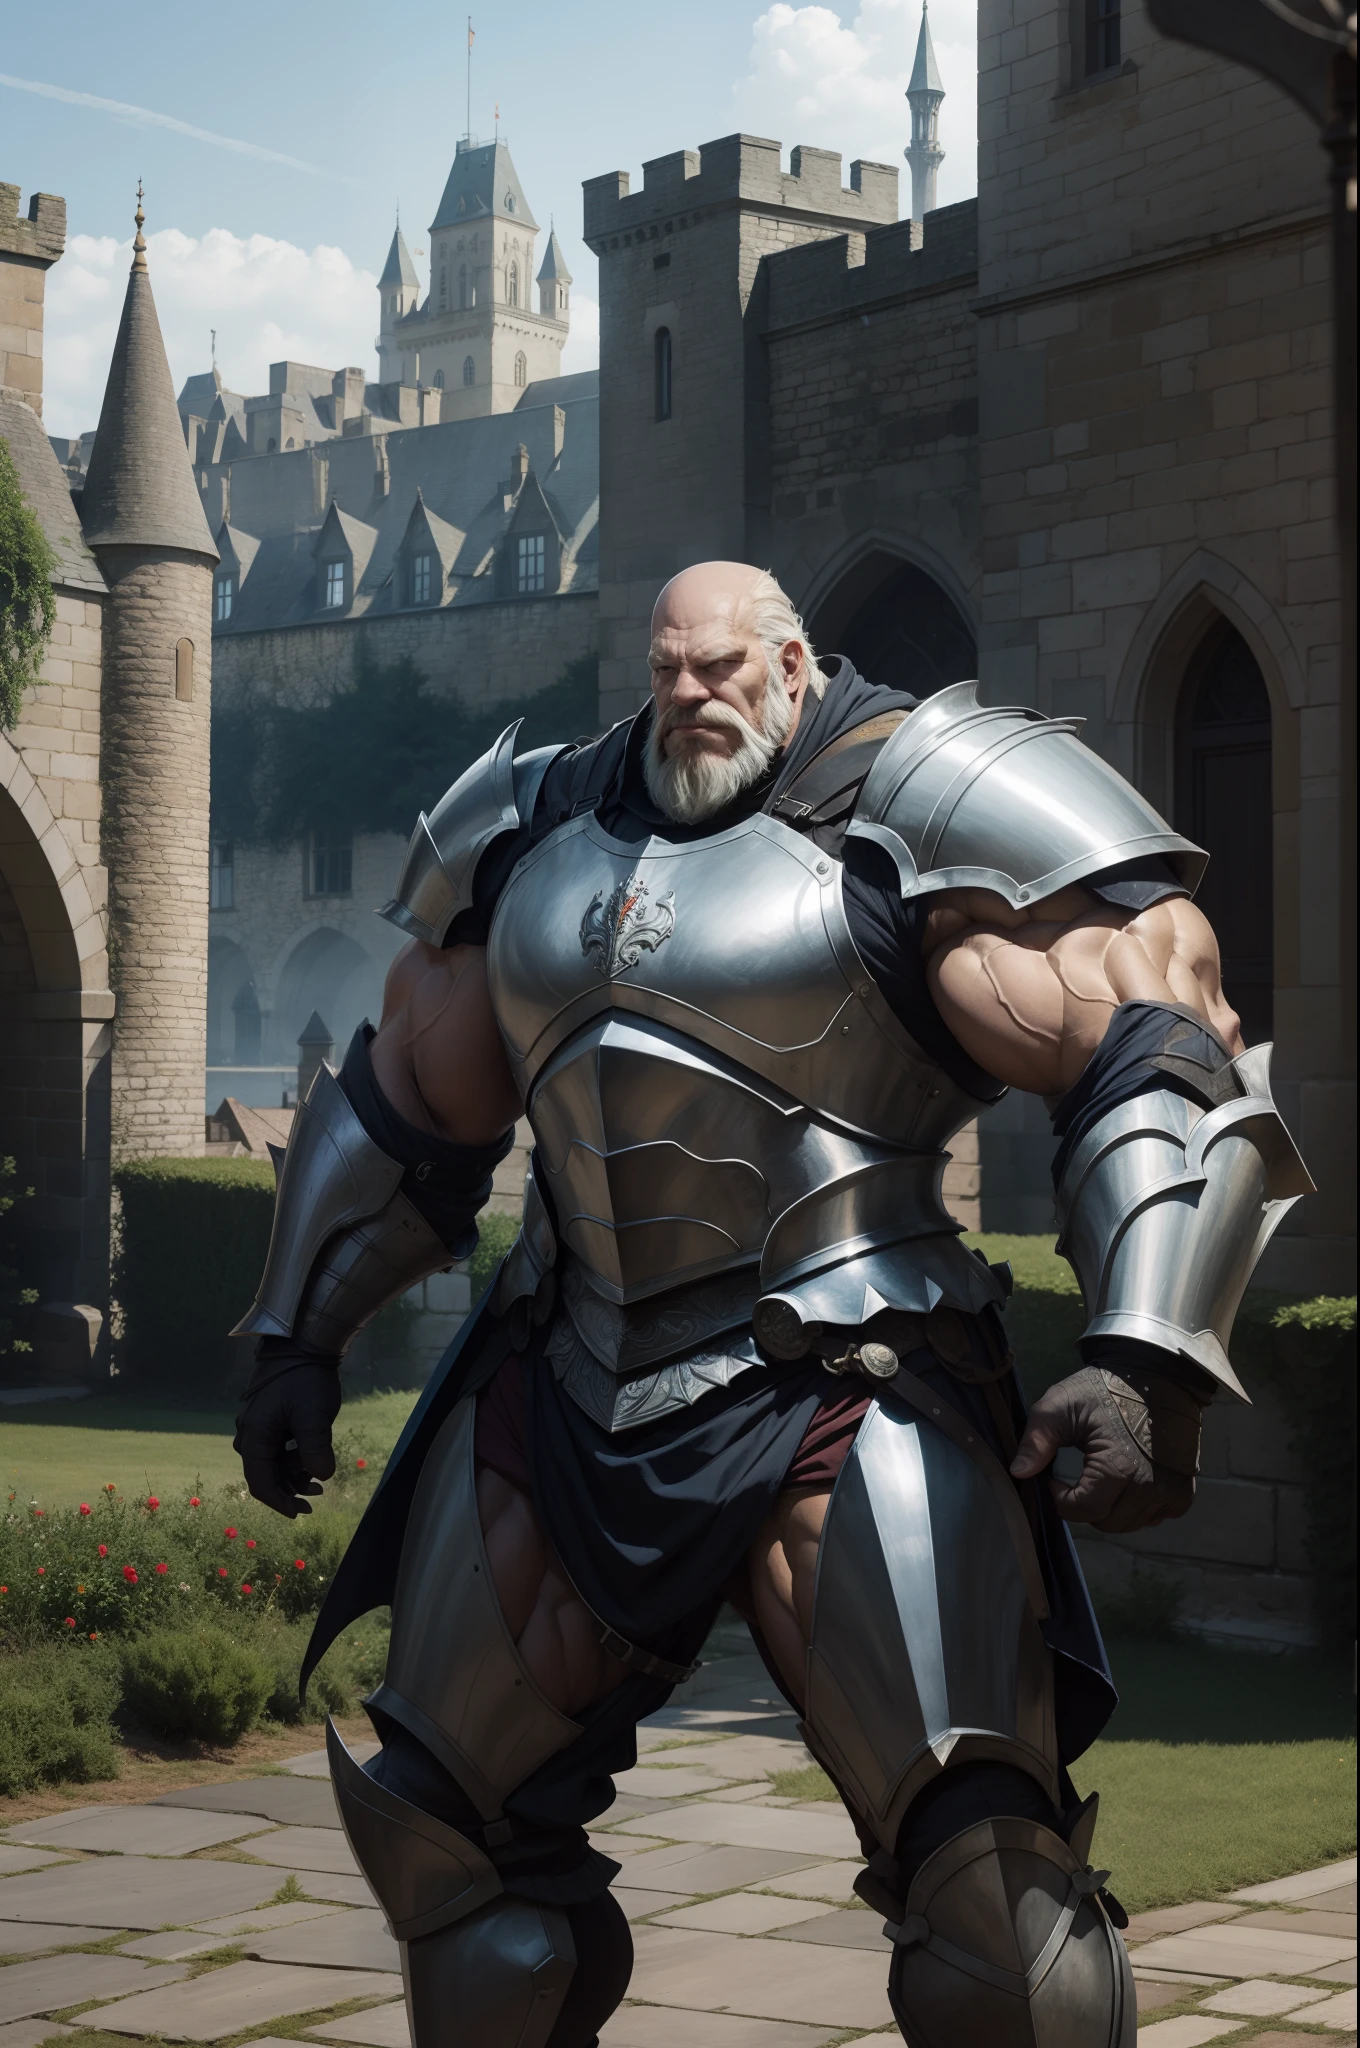 viejo caballero, blindado, fondo del castillo, muscular, usando armadura